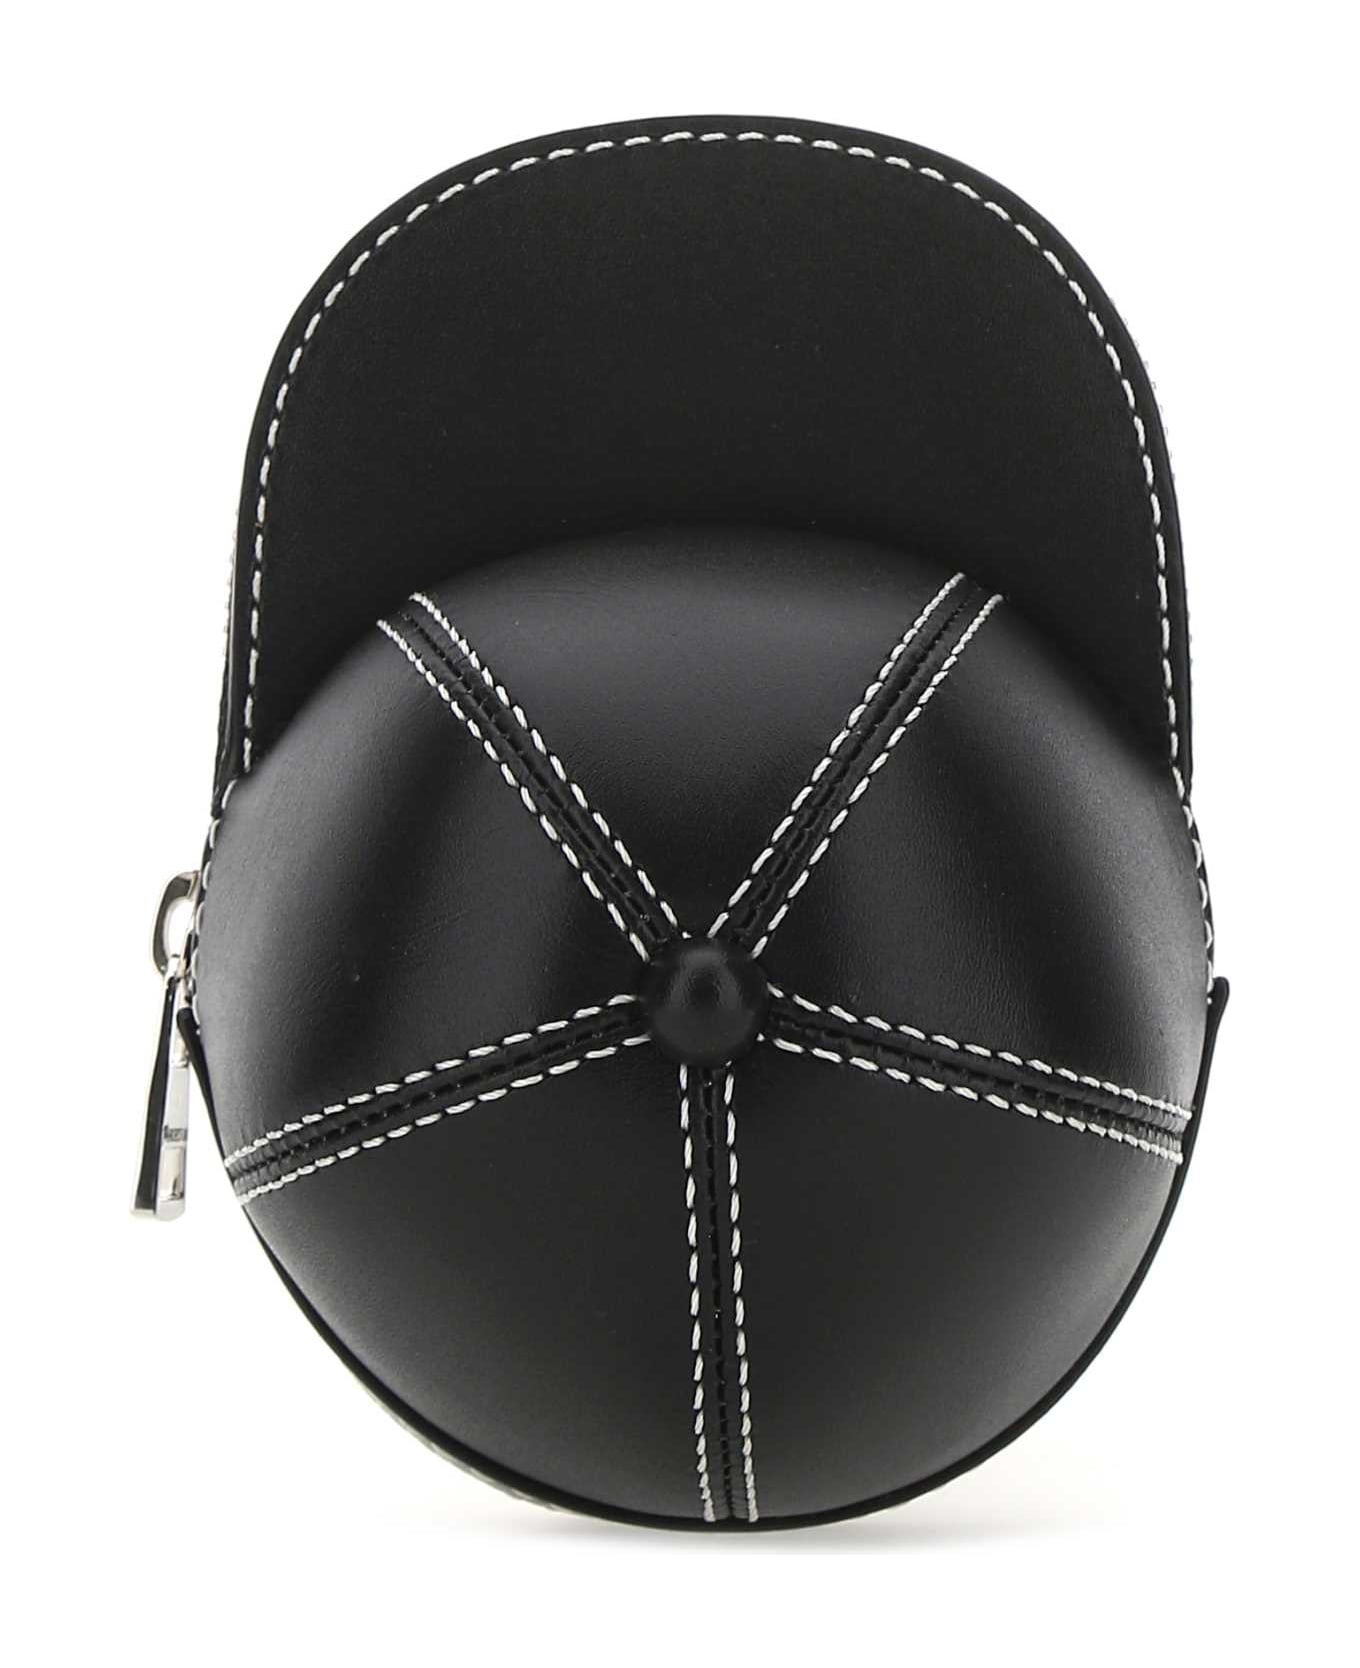 J.W. Anderson Black Leather Mini Cap Crossbody Bag - Black